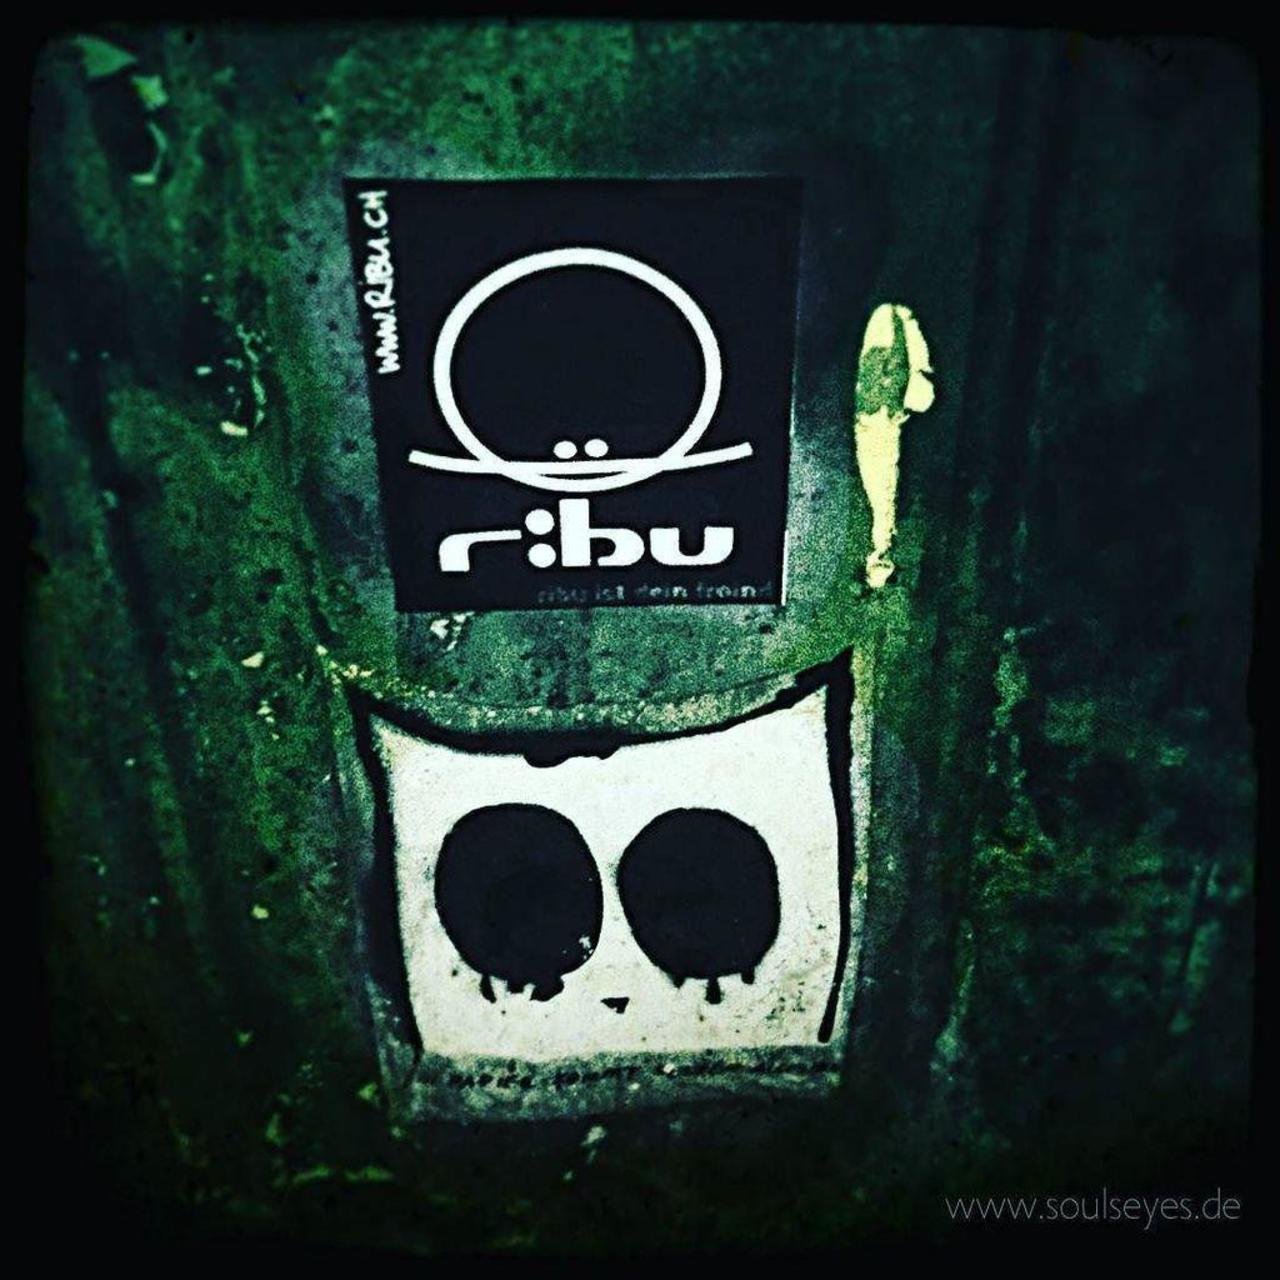 #ribu #ribudeinfroind #ribuberlin #switzerland #swiss #schweiz #berlin #streetart #streetartist #pasteup #graffiti … http://t.co/yrdlPinswB